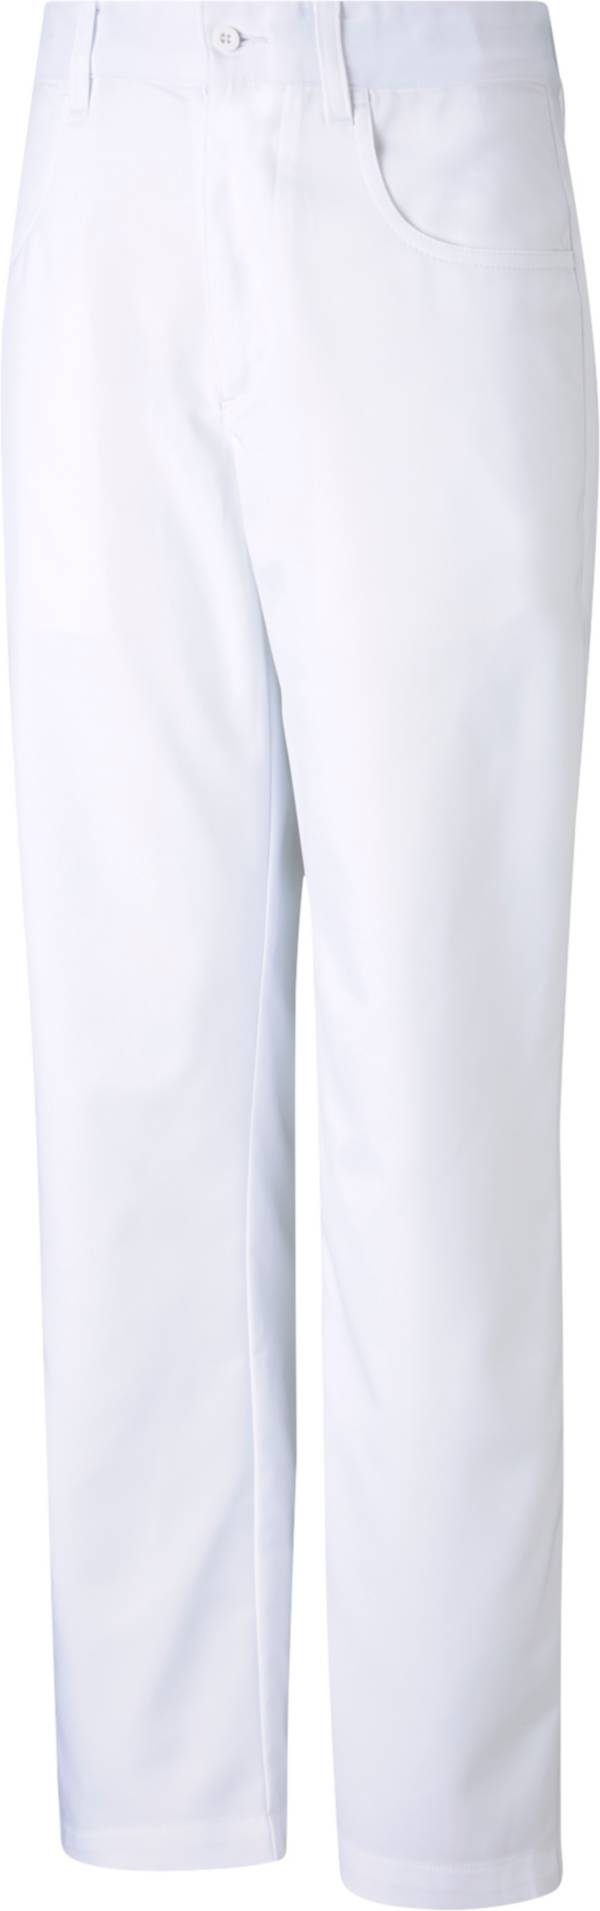 PUMA Boys' 5 Pocket Golf Pants product image